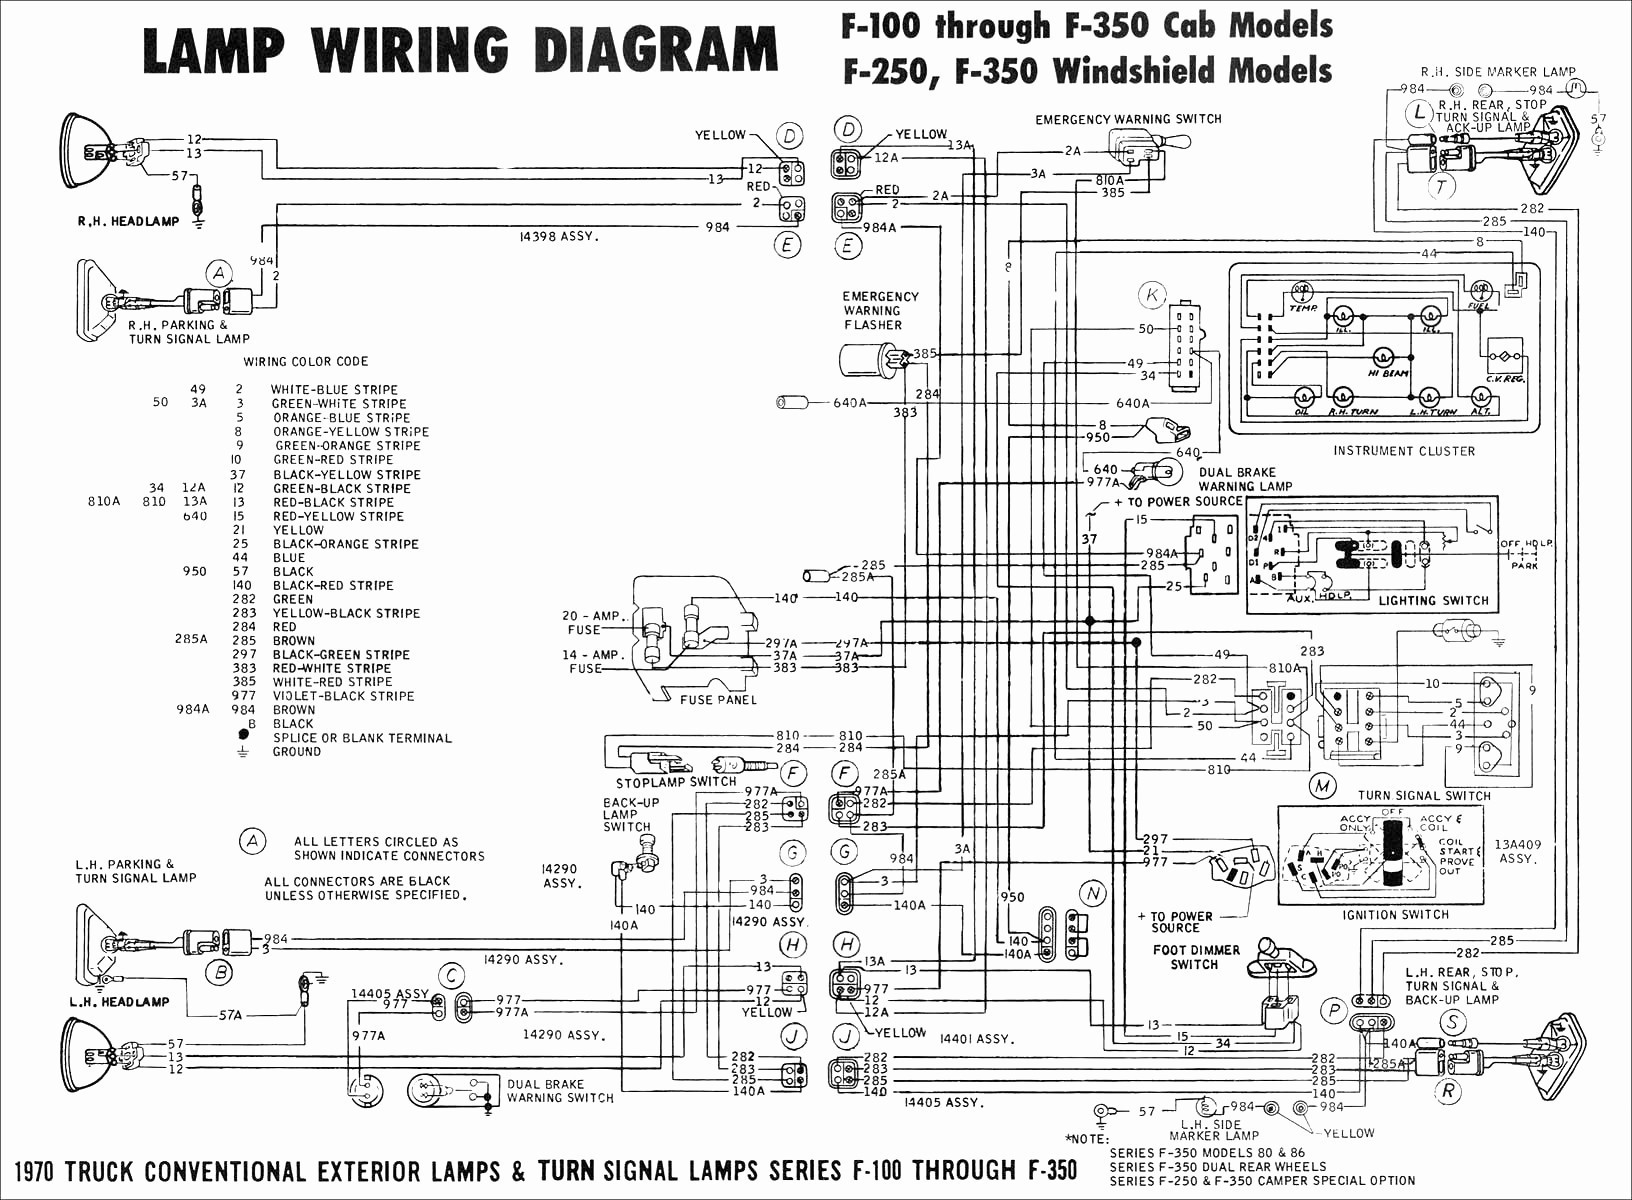 Valve Timing Diagram for Petrol Engine 3l Engine Diagram Wiring Diagrams Schematics • Of Valve Timing Diagram for Petrol Engine